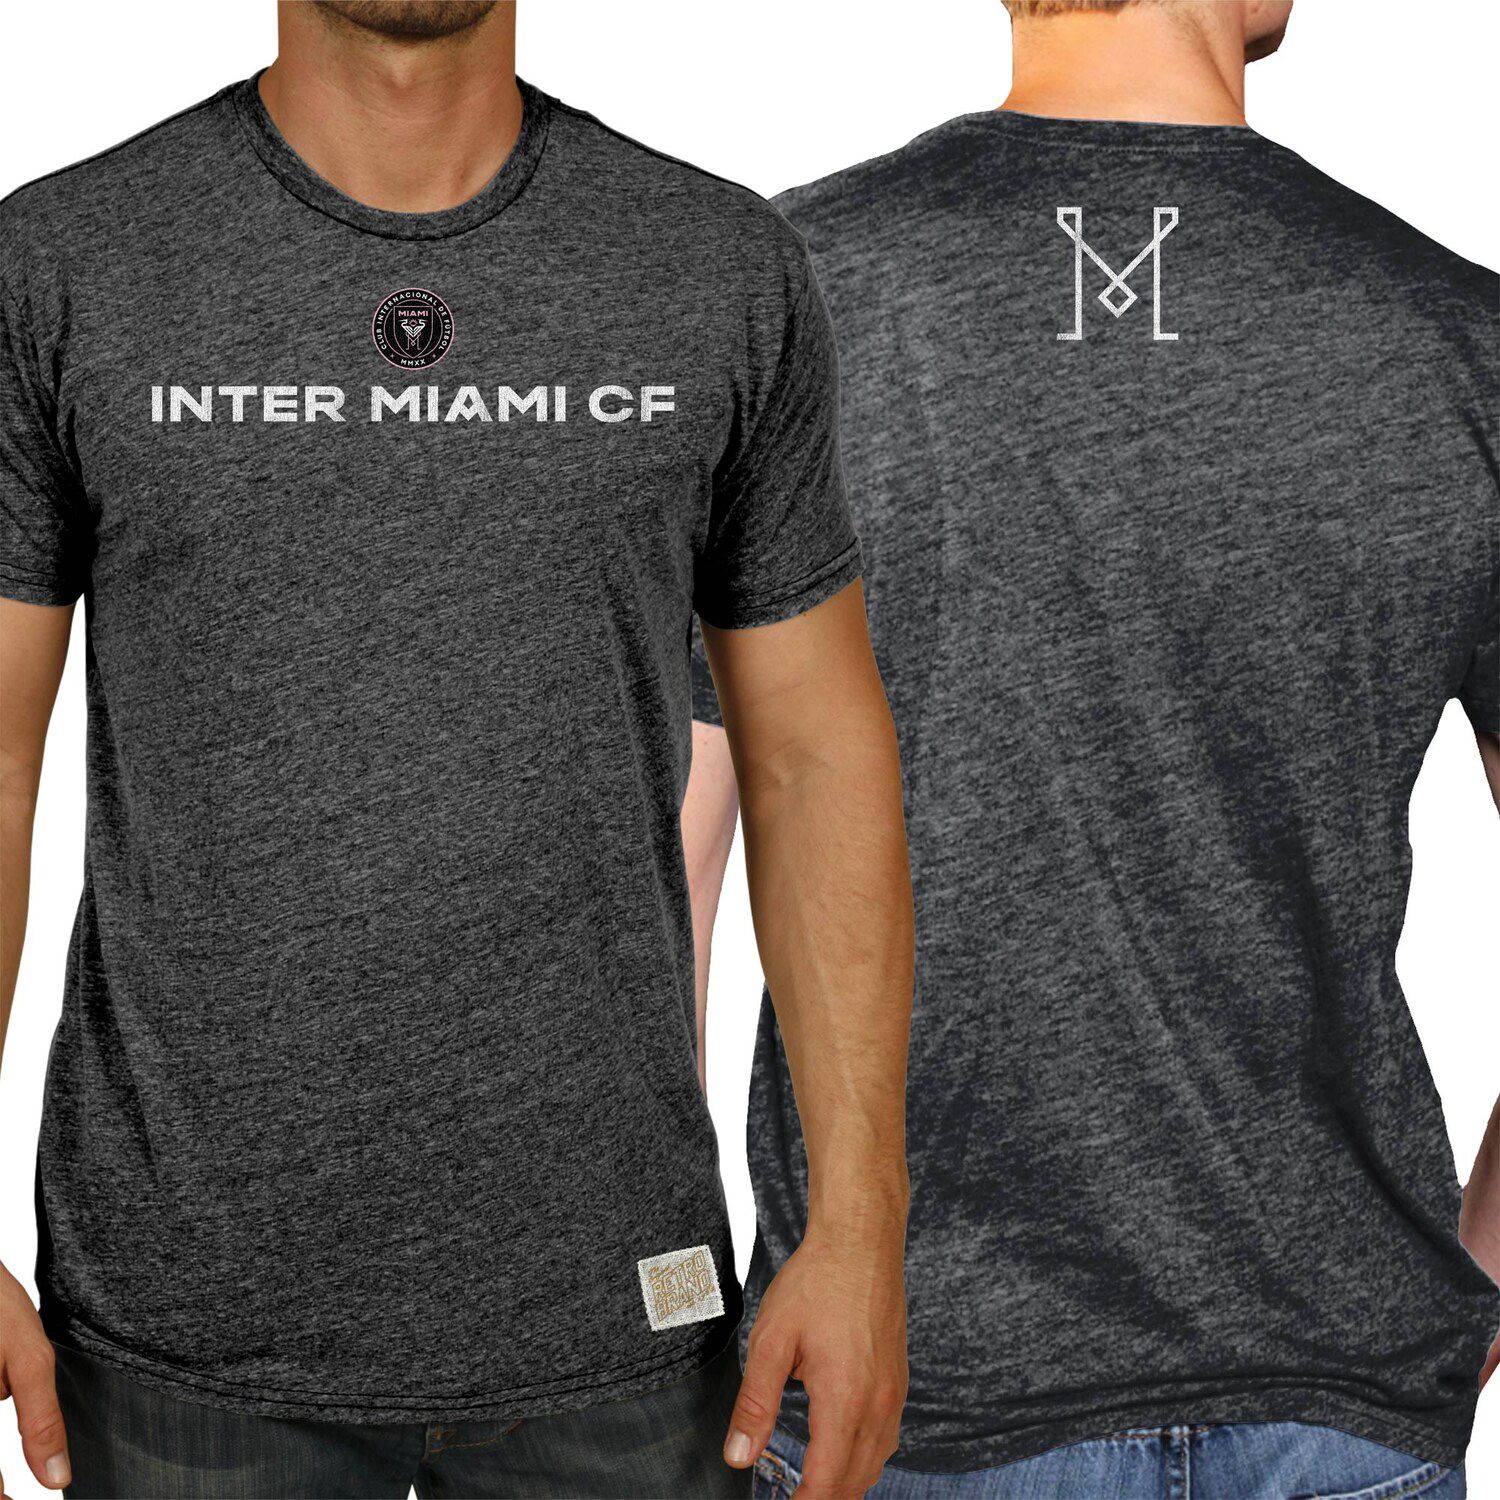 Image for Unbranded Men's Original Retro Brand Black Inter Miami CF Tri-Blend T-Shirt at Kohl's.